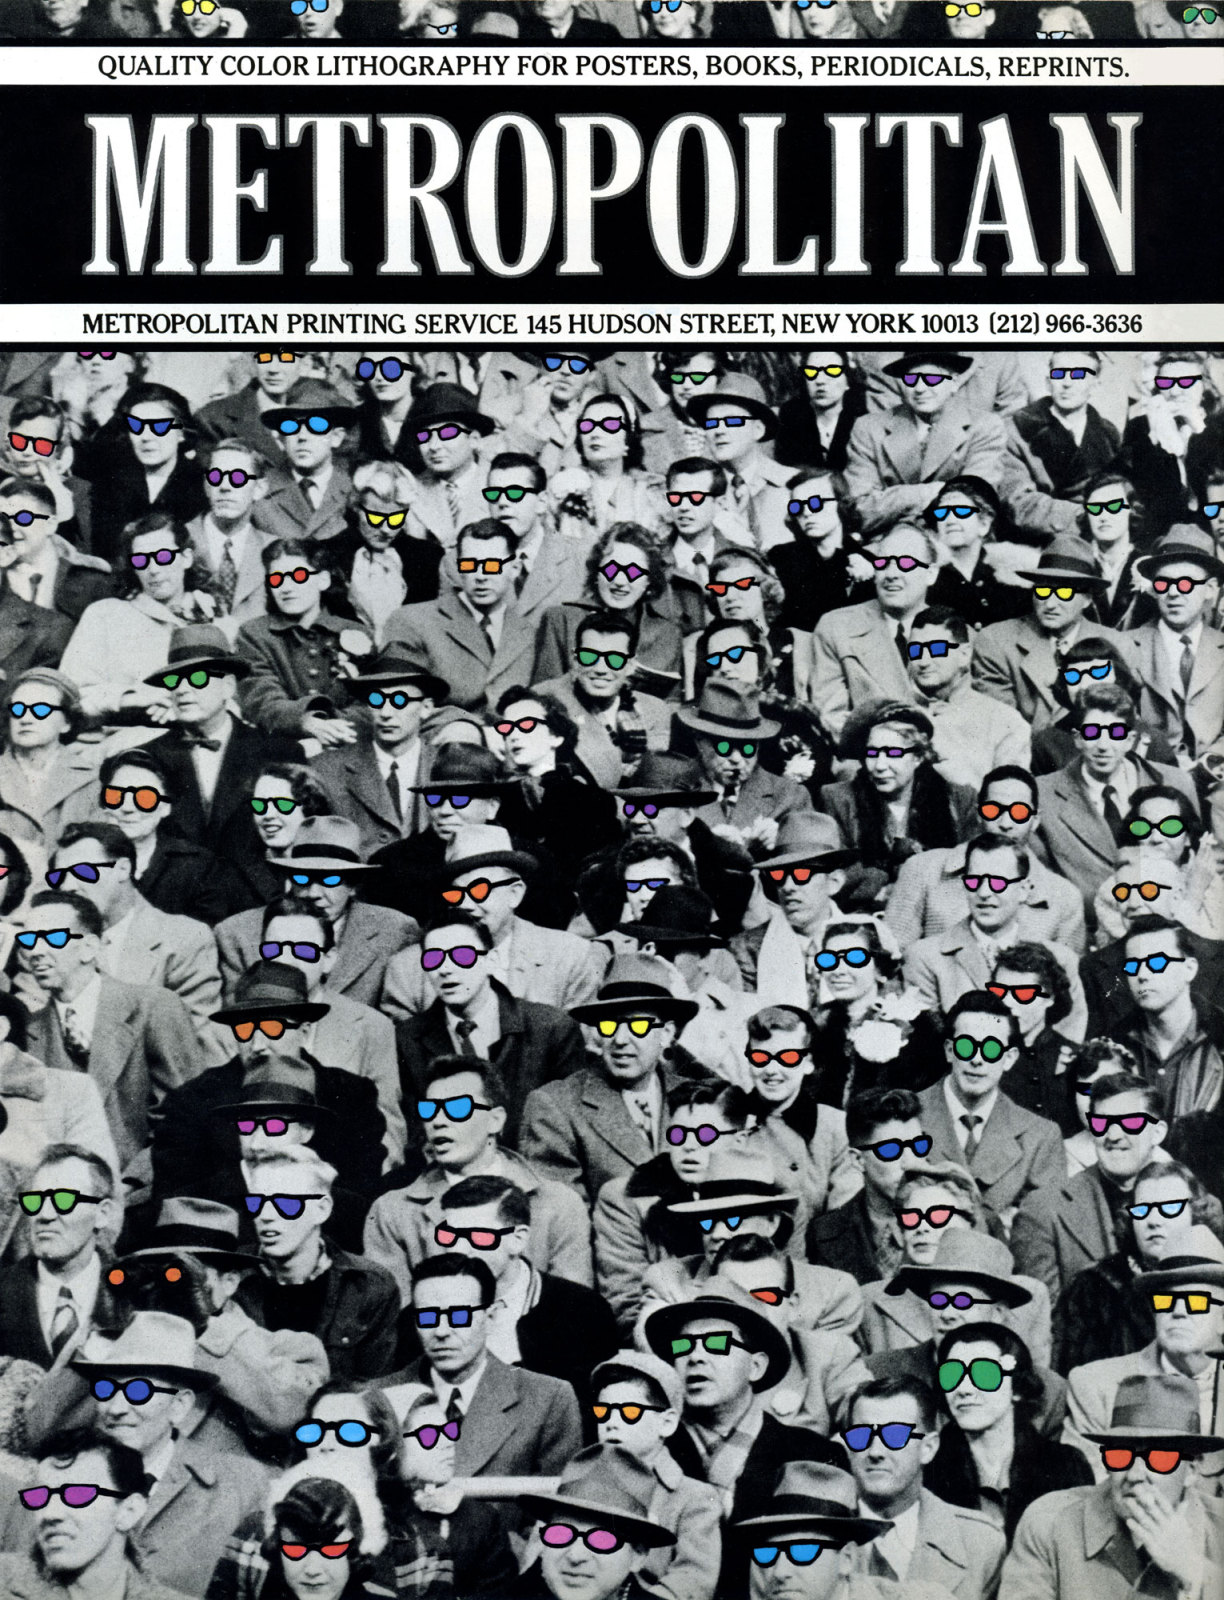 "Metropolitan Ad" (1980)